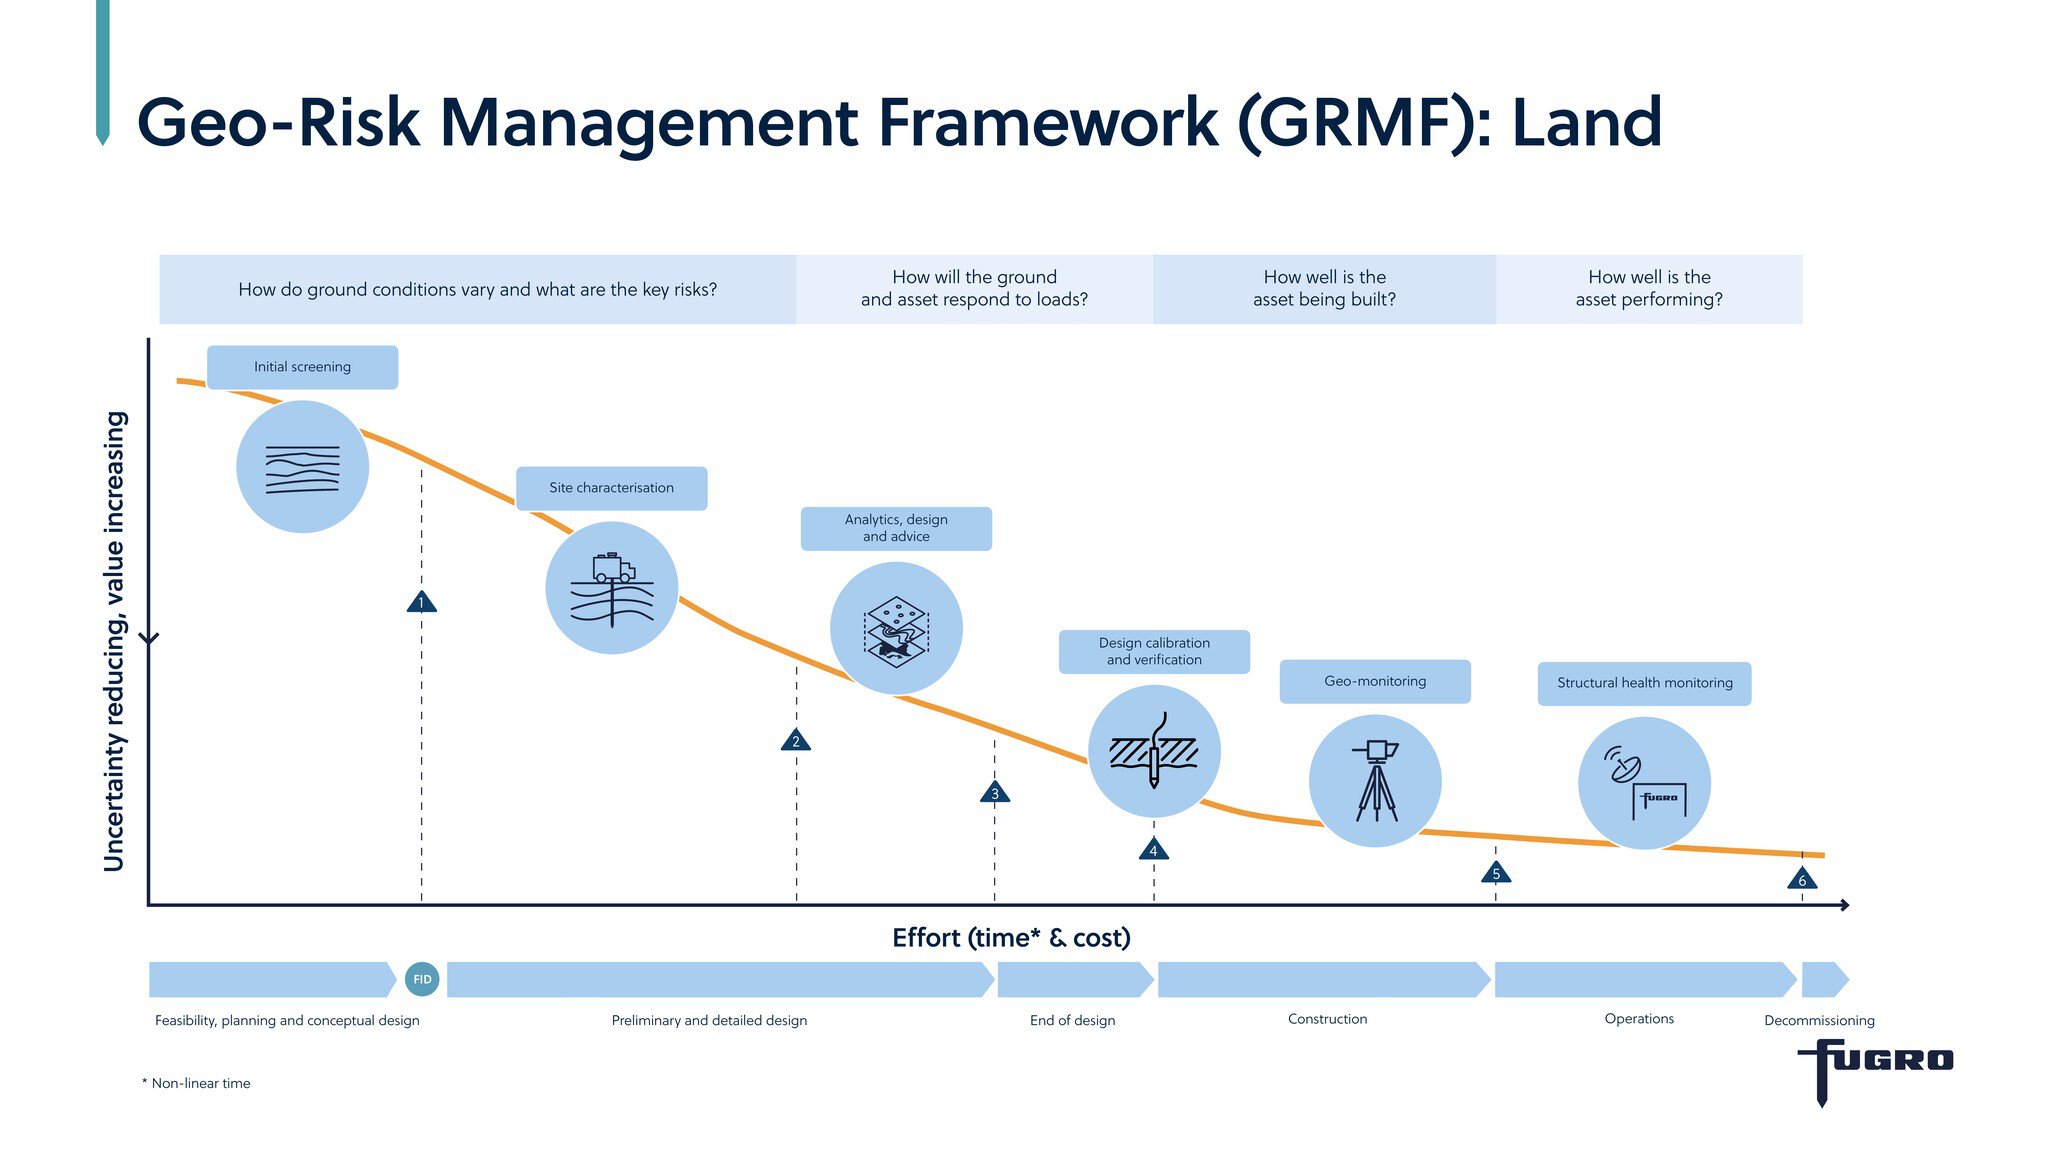 GRMF Framework_v7
Geo-Risk Management Framework
~ai-25c3d002-6fab-4bde-b615-741ea4c2ba0c_